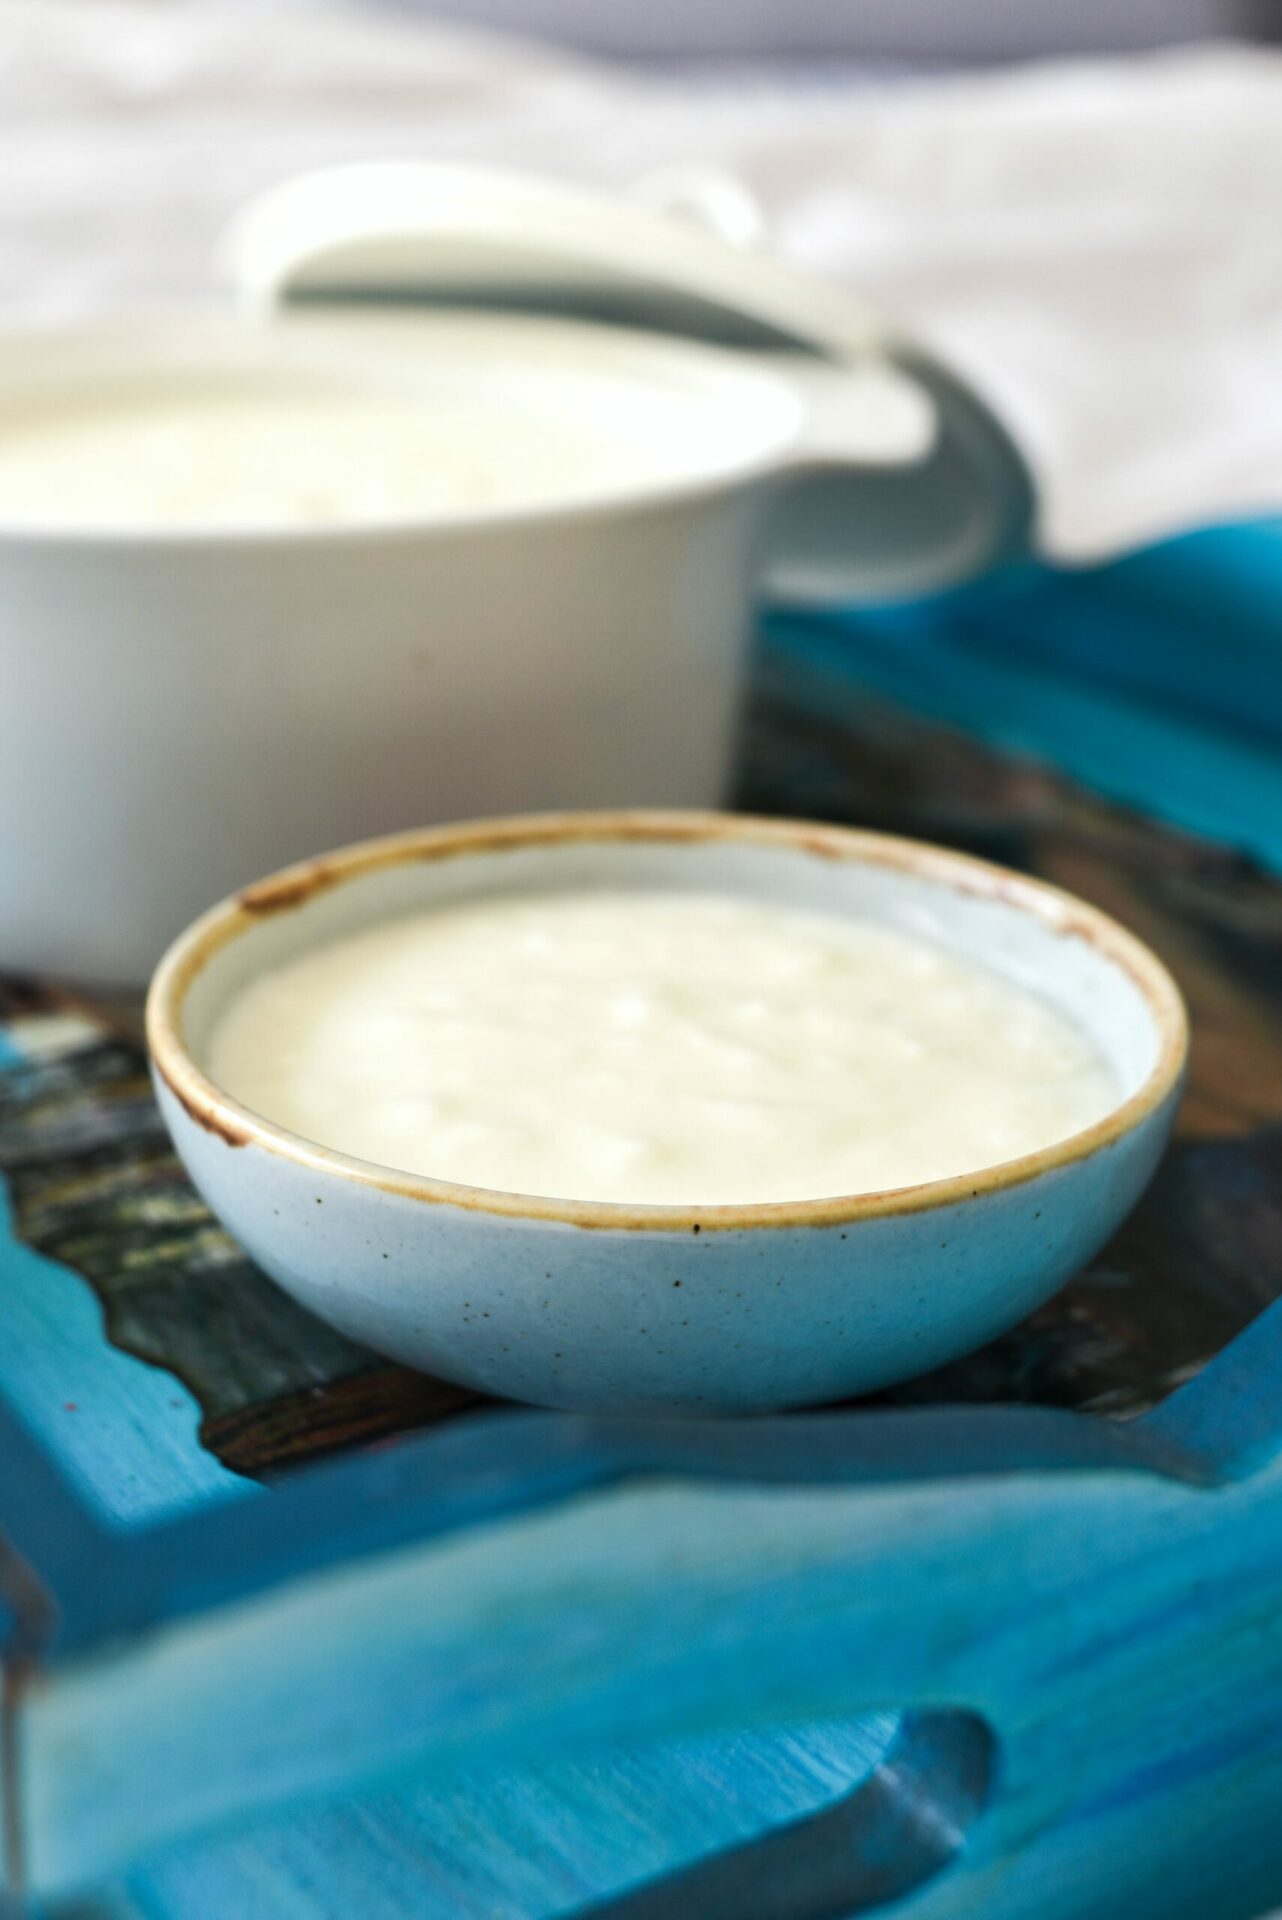 Organic low-fat vanilla yogurt brands